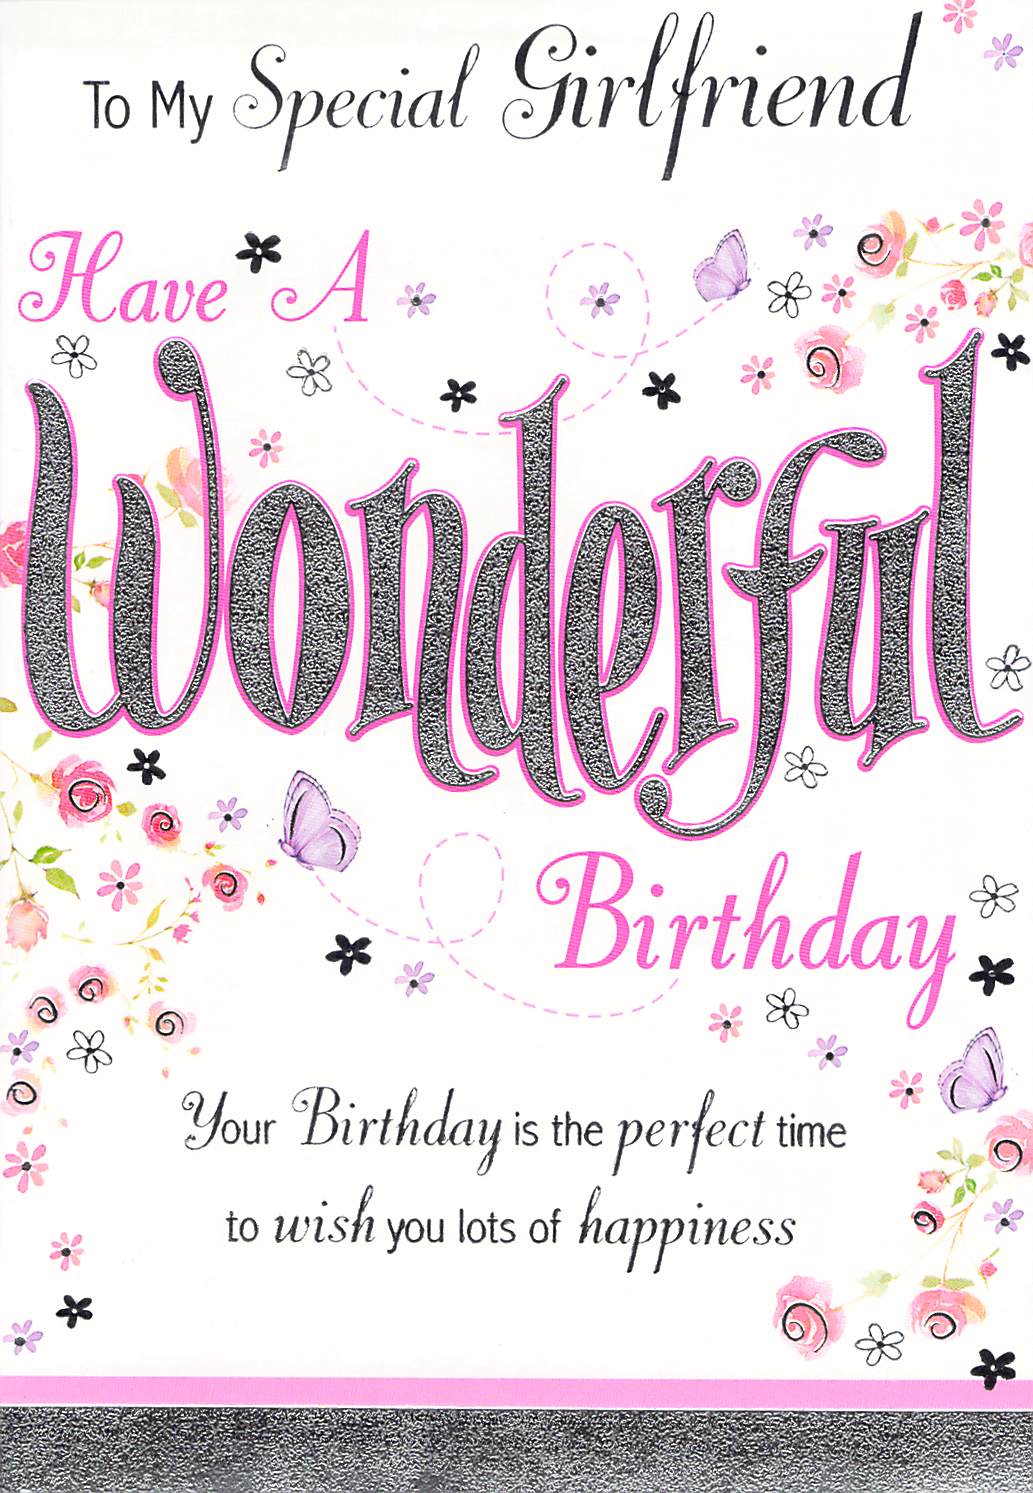 Birthday - Girlfriend - Flowers & Butterflies - Greeting Card